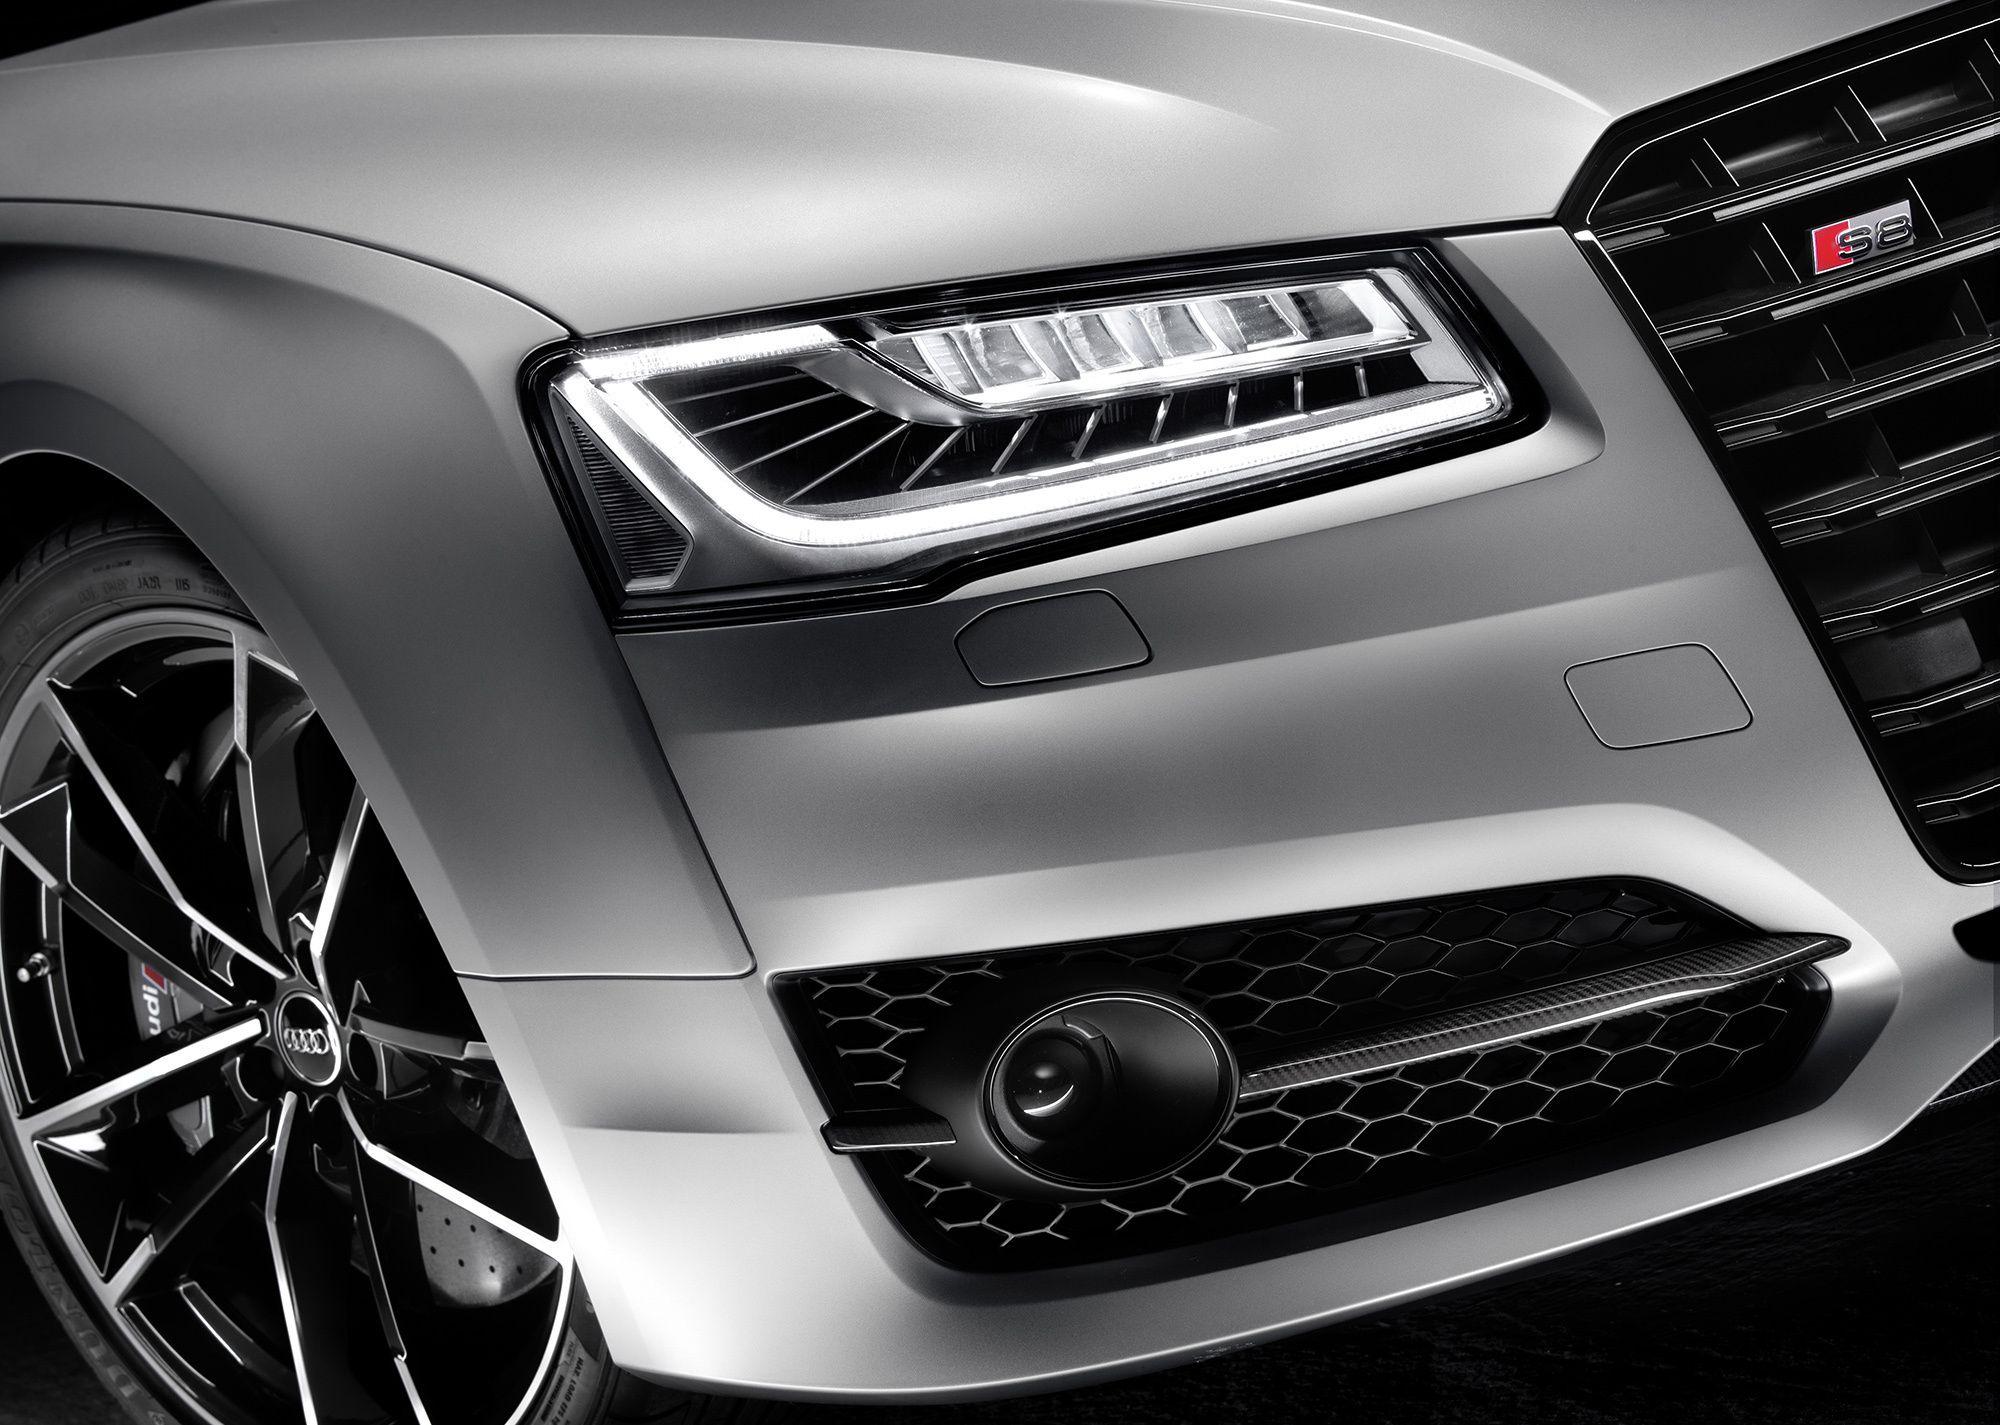 Audi S8 plus Wallpaper Image Photo Picture Background